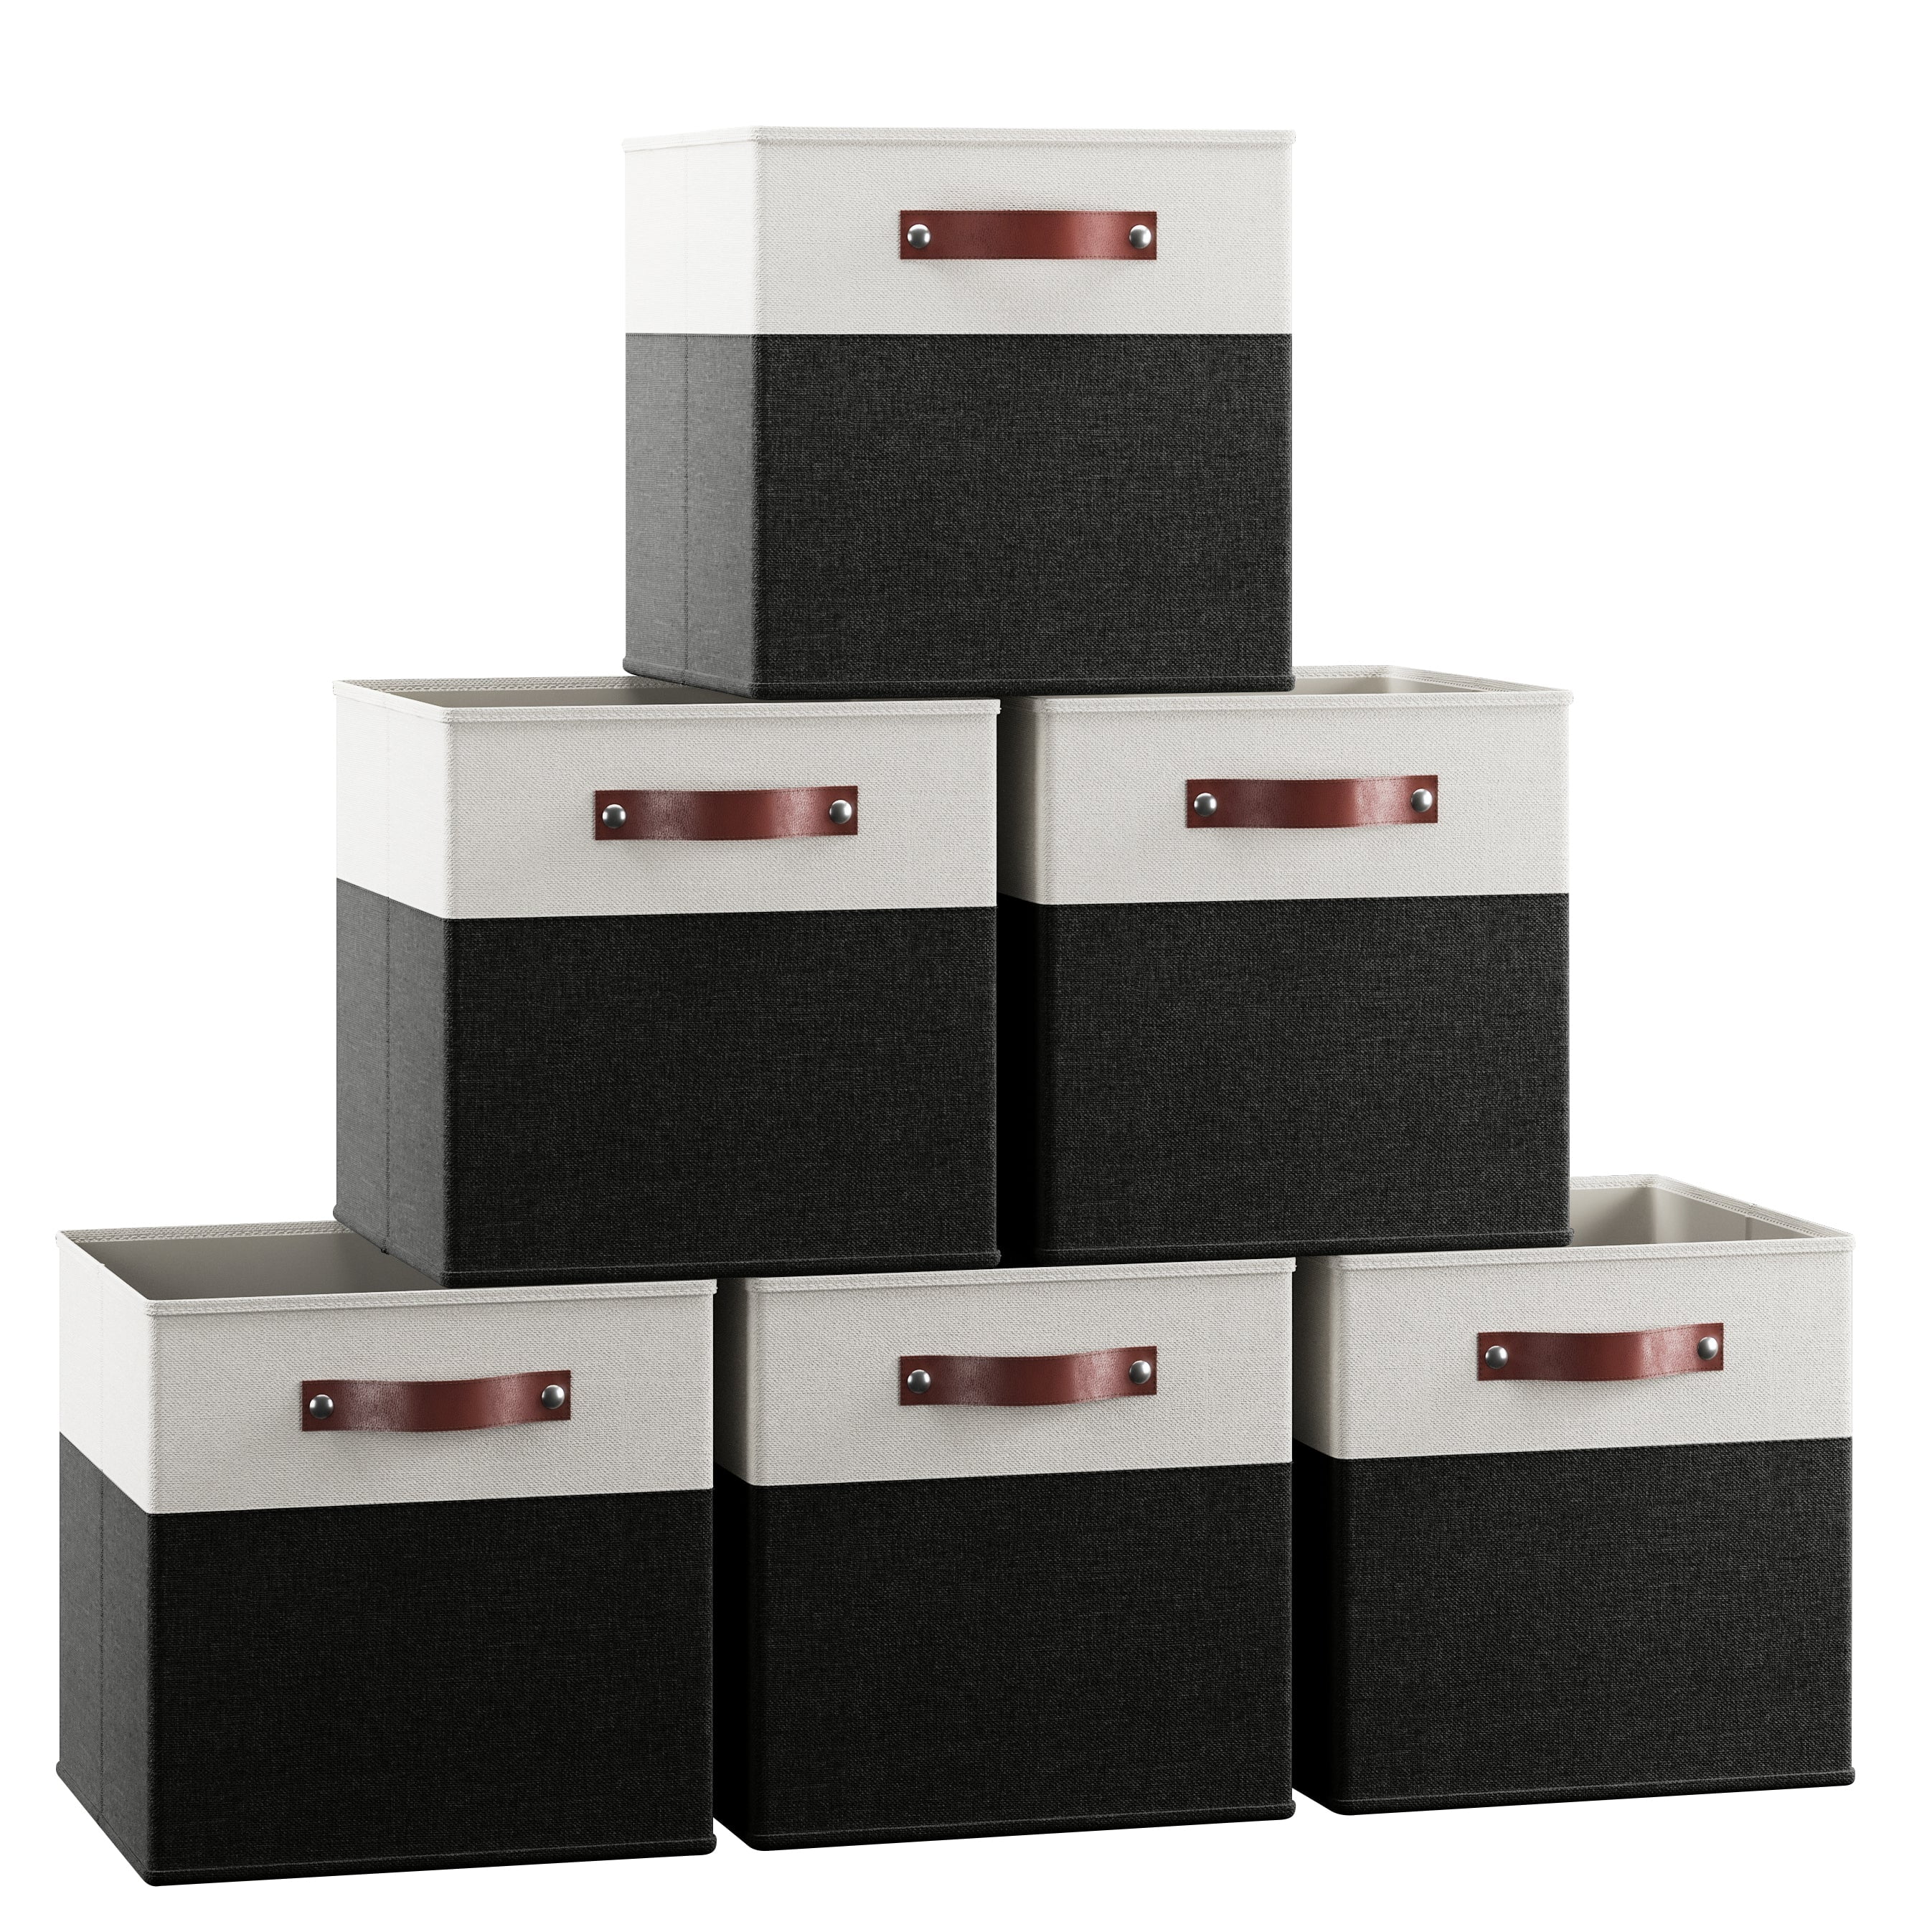 PORTABLE RECTANGULAR BASKET Small Organizer Bins Sturdy Storage Box $13.85  - PicClick AU